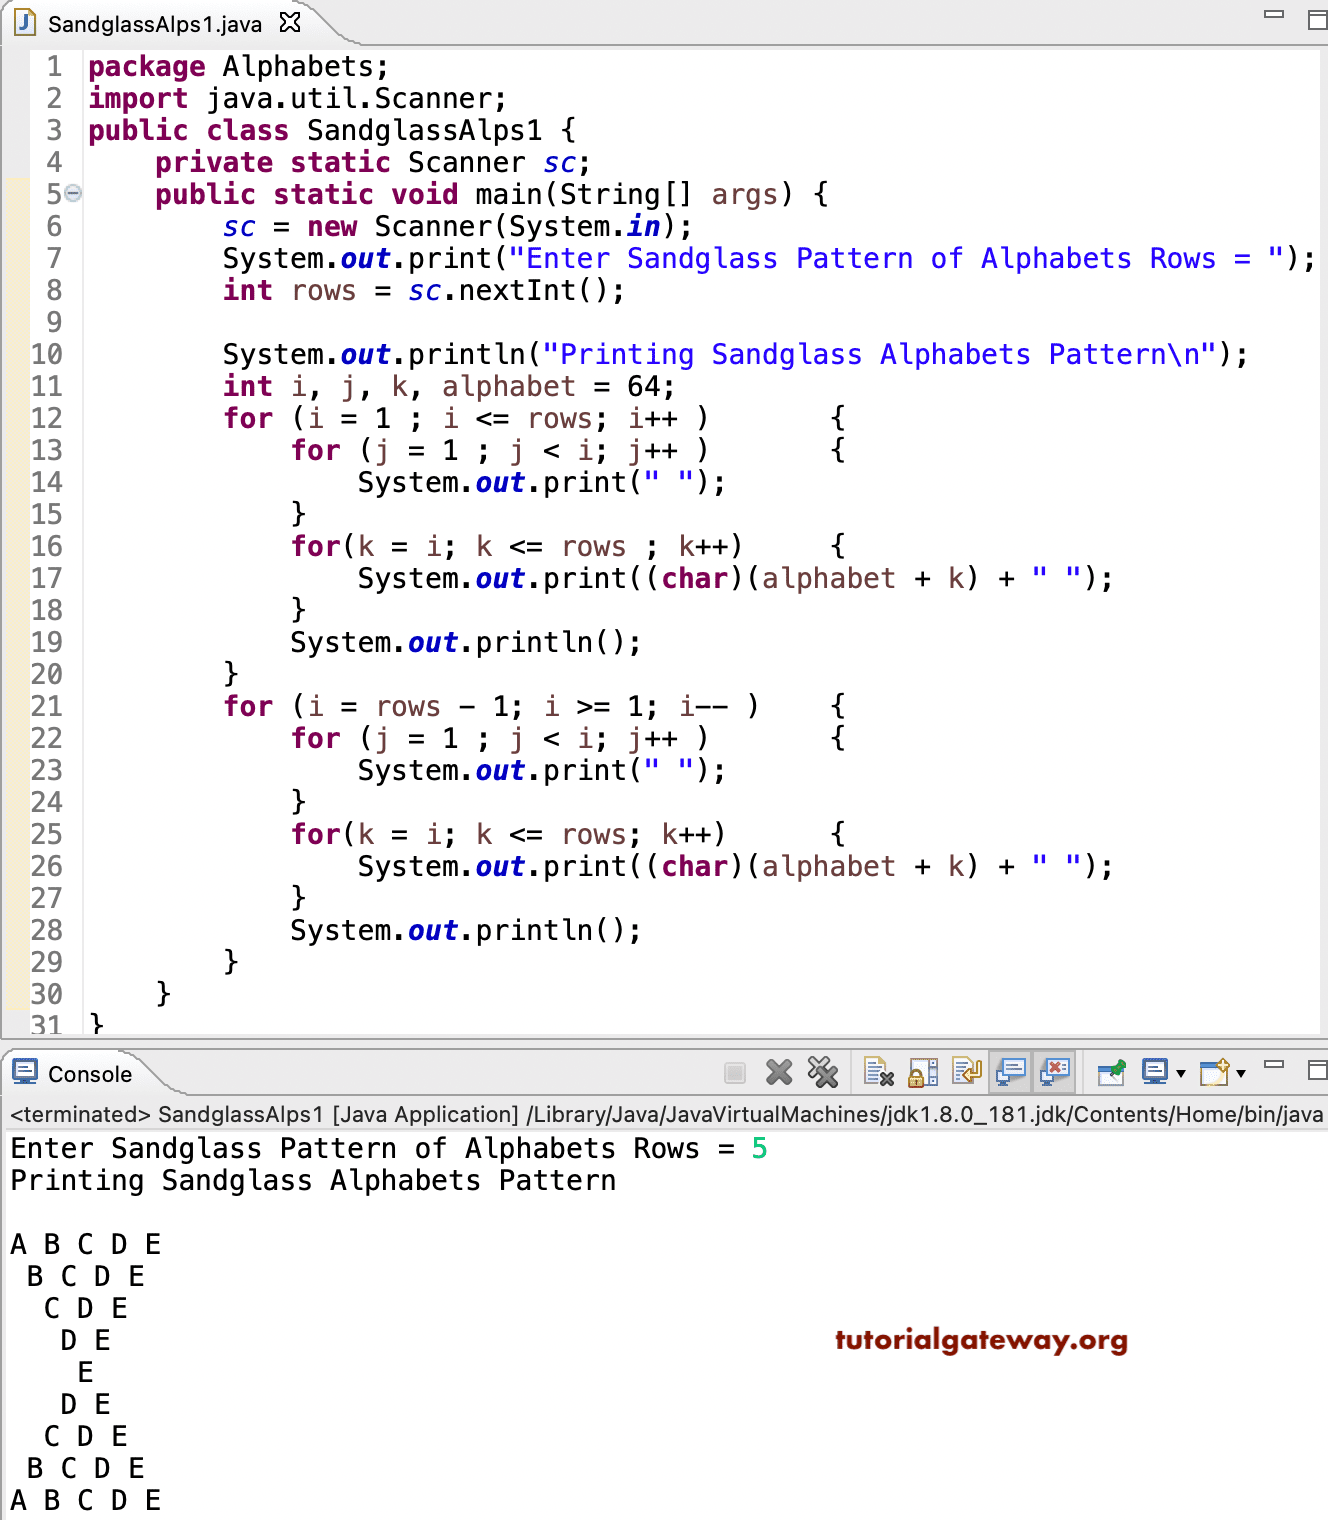 Java Program to Print Sandglass Alphabets Pattern